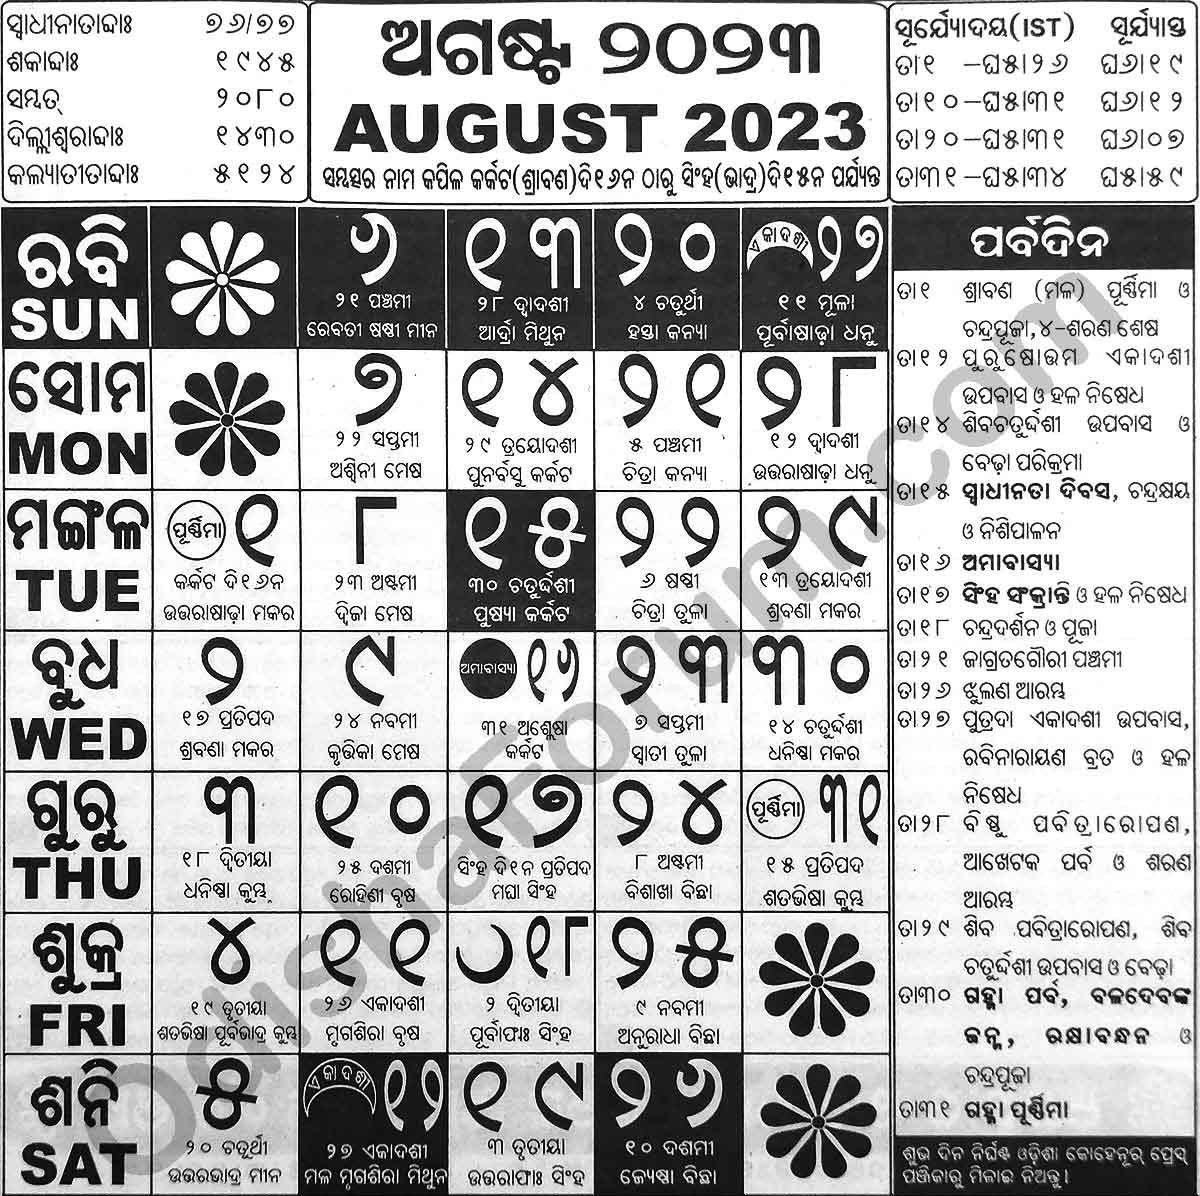 Odia Calendar 2023 August